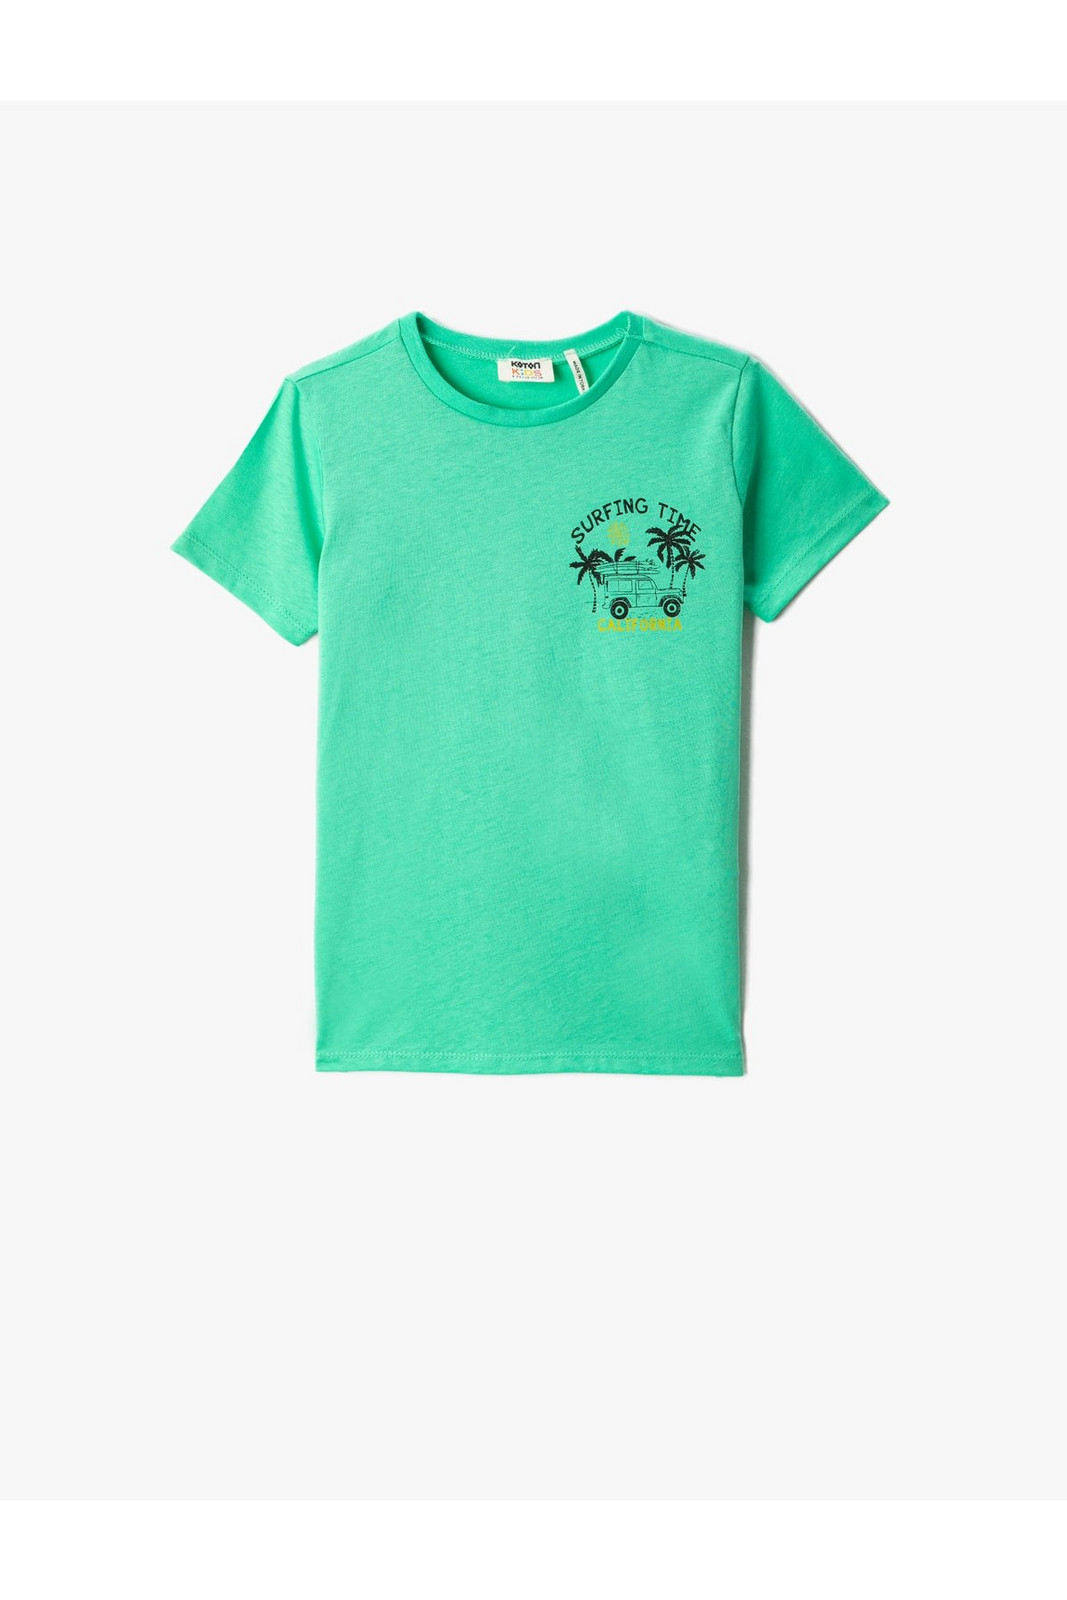 Koton Palm Tree Detailed Printed Short Sleeve T-Shirt Crew Neck Cotton